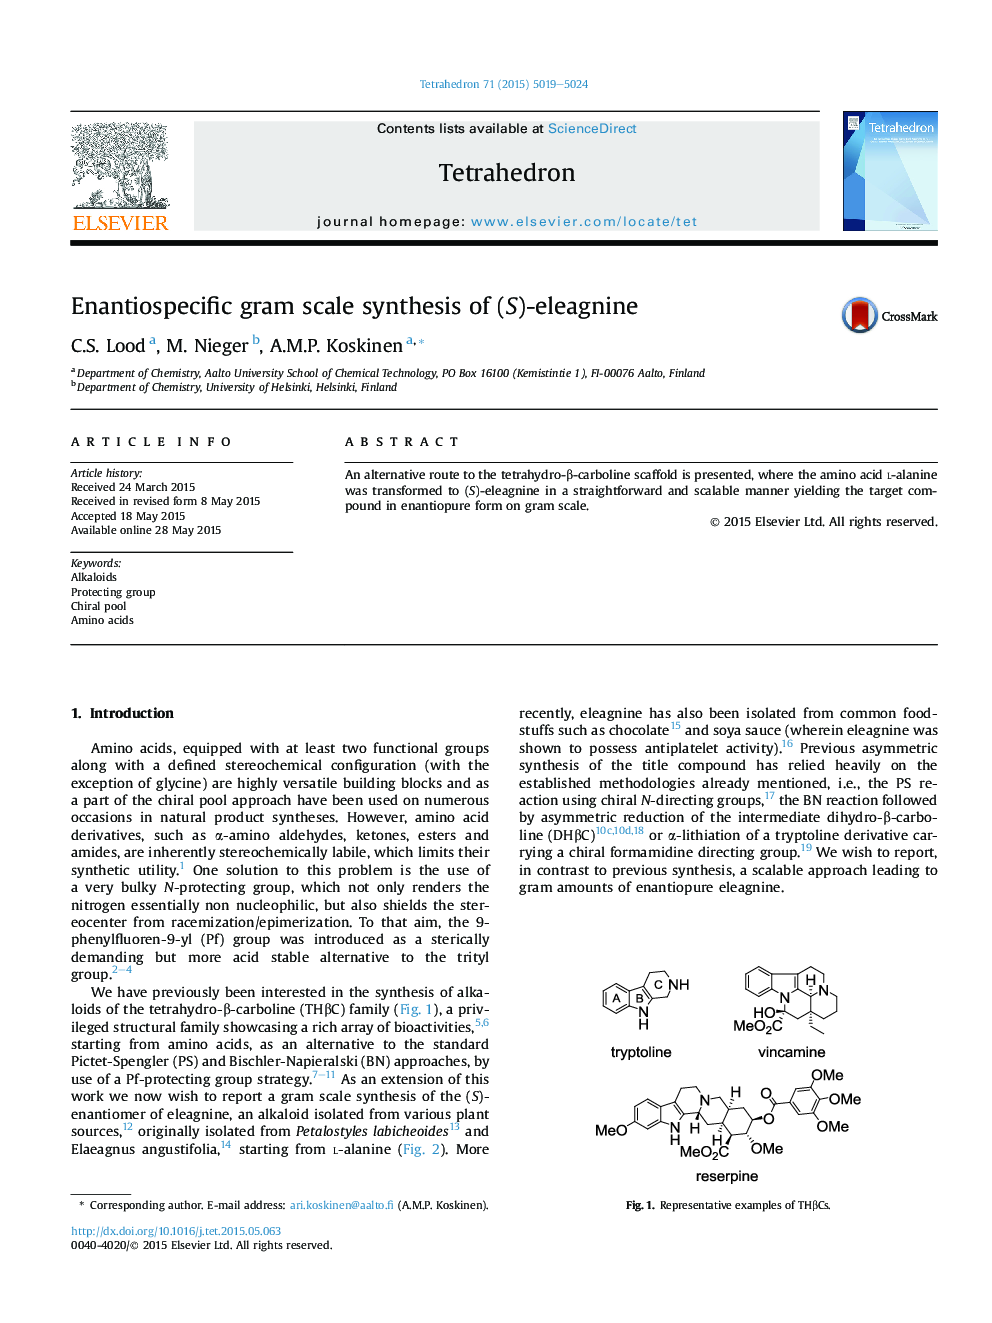 Enantiospecific gram scale synthesis of (S)-eleagnine